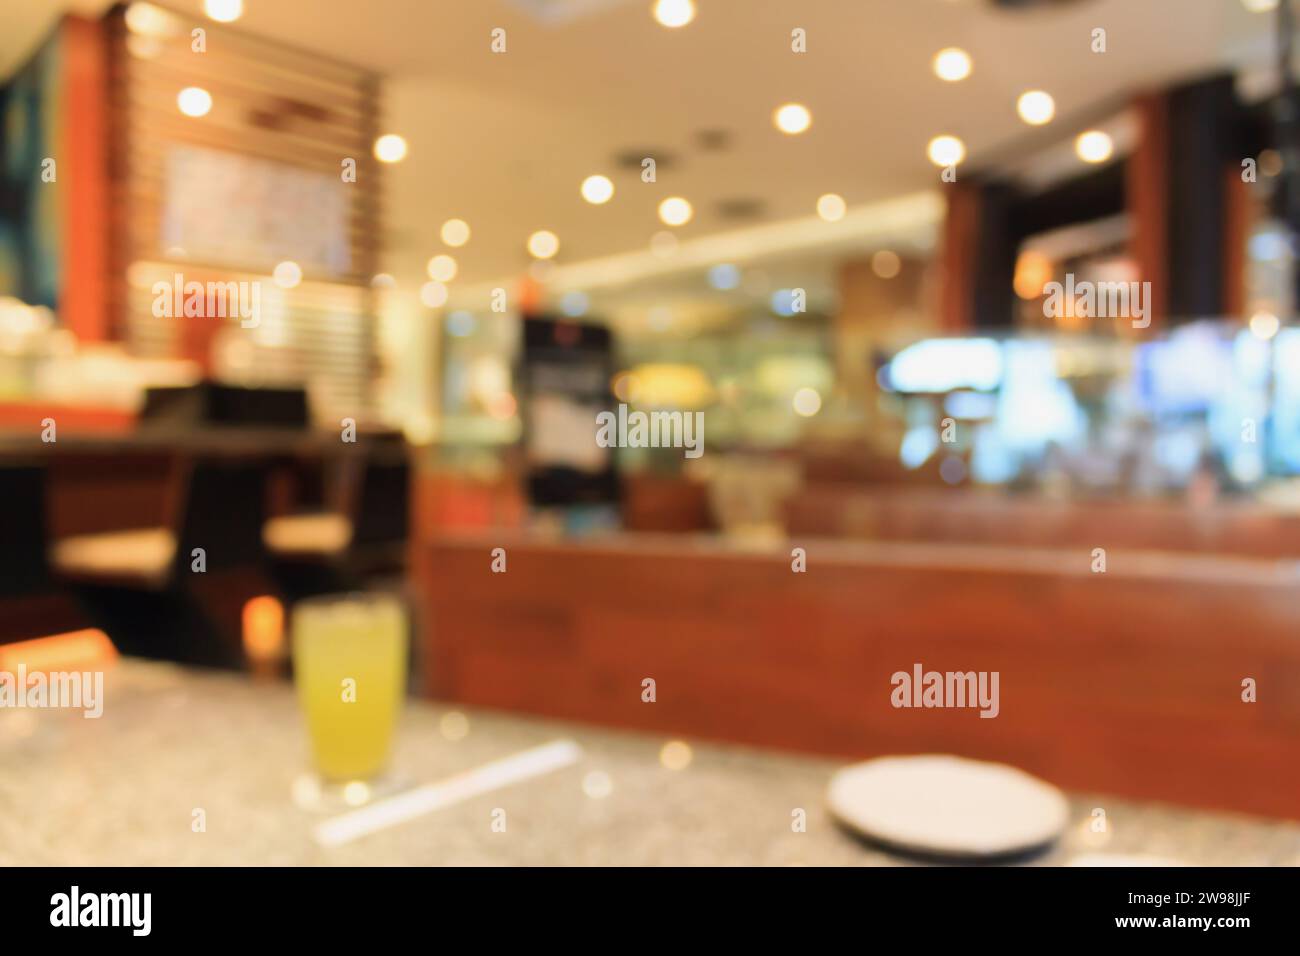 japanese restaurant interior blurred background Stock Photo